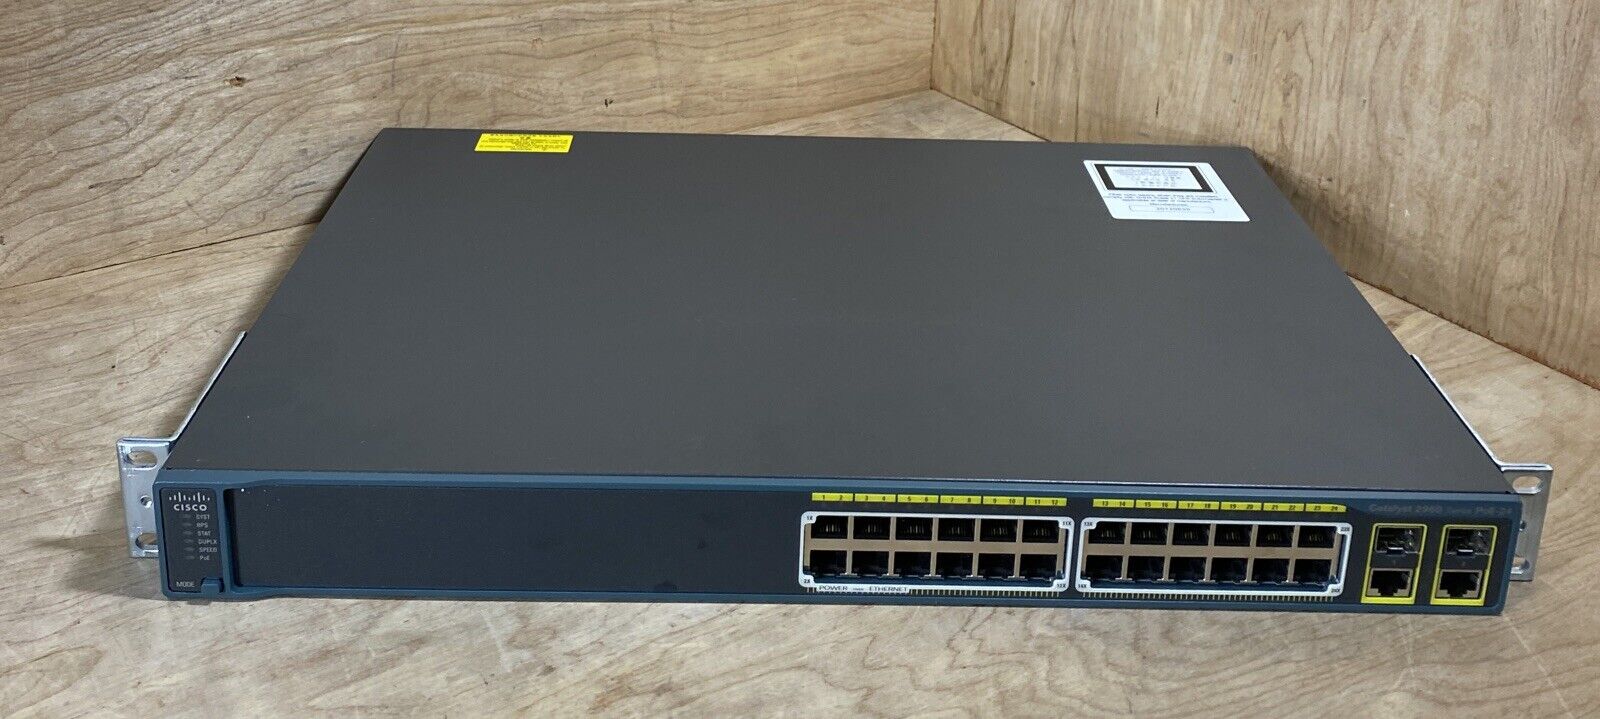 Cisco Catalyst 2960 WS-C2960-24PC-L 24 Port Fast PoE Ethernet Switch